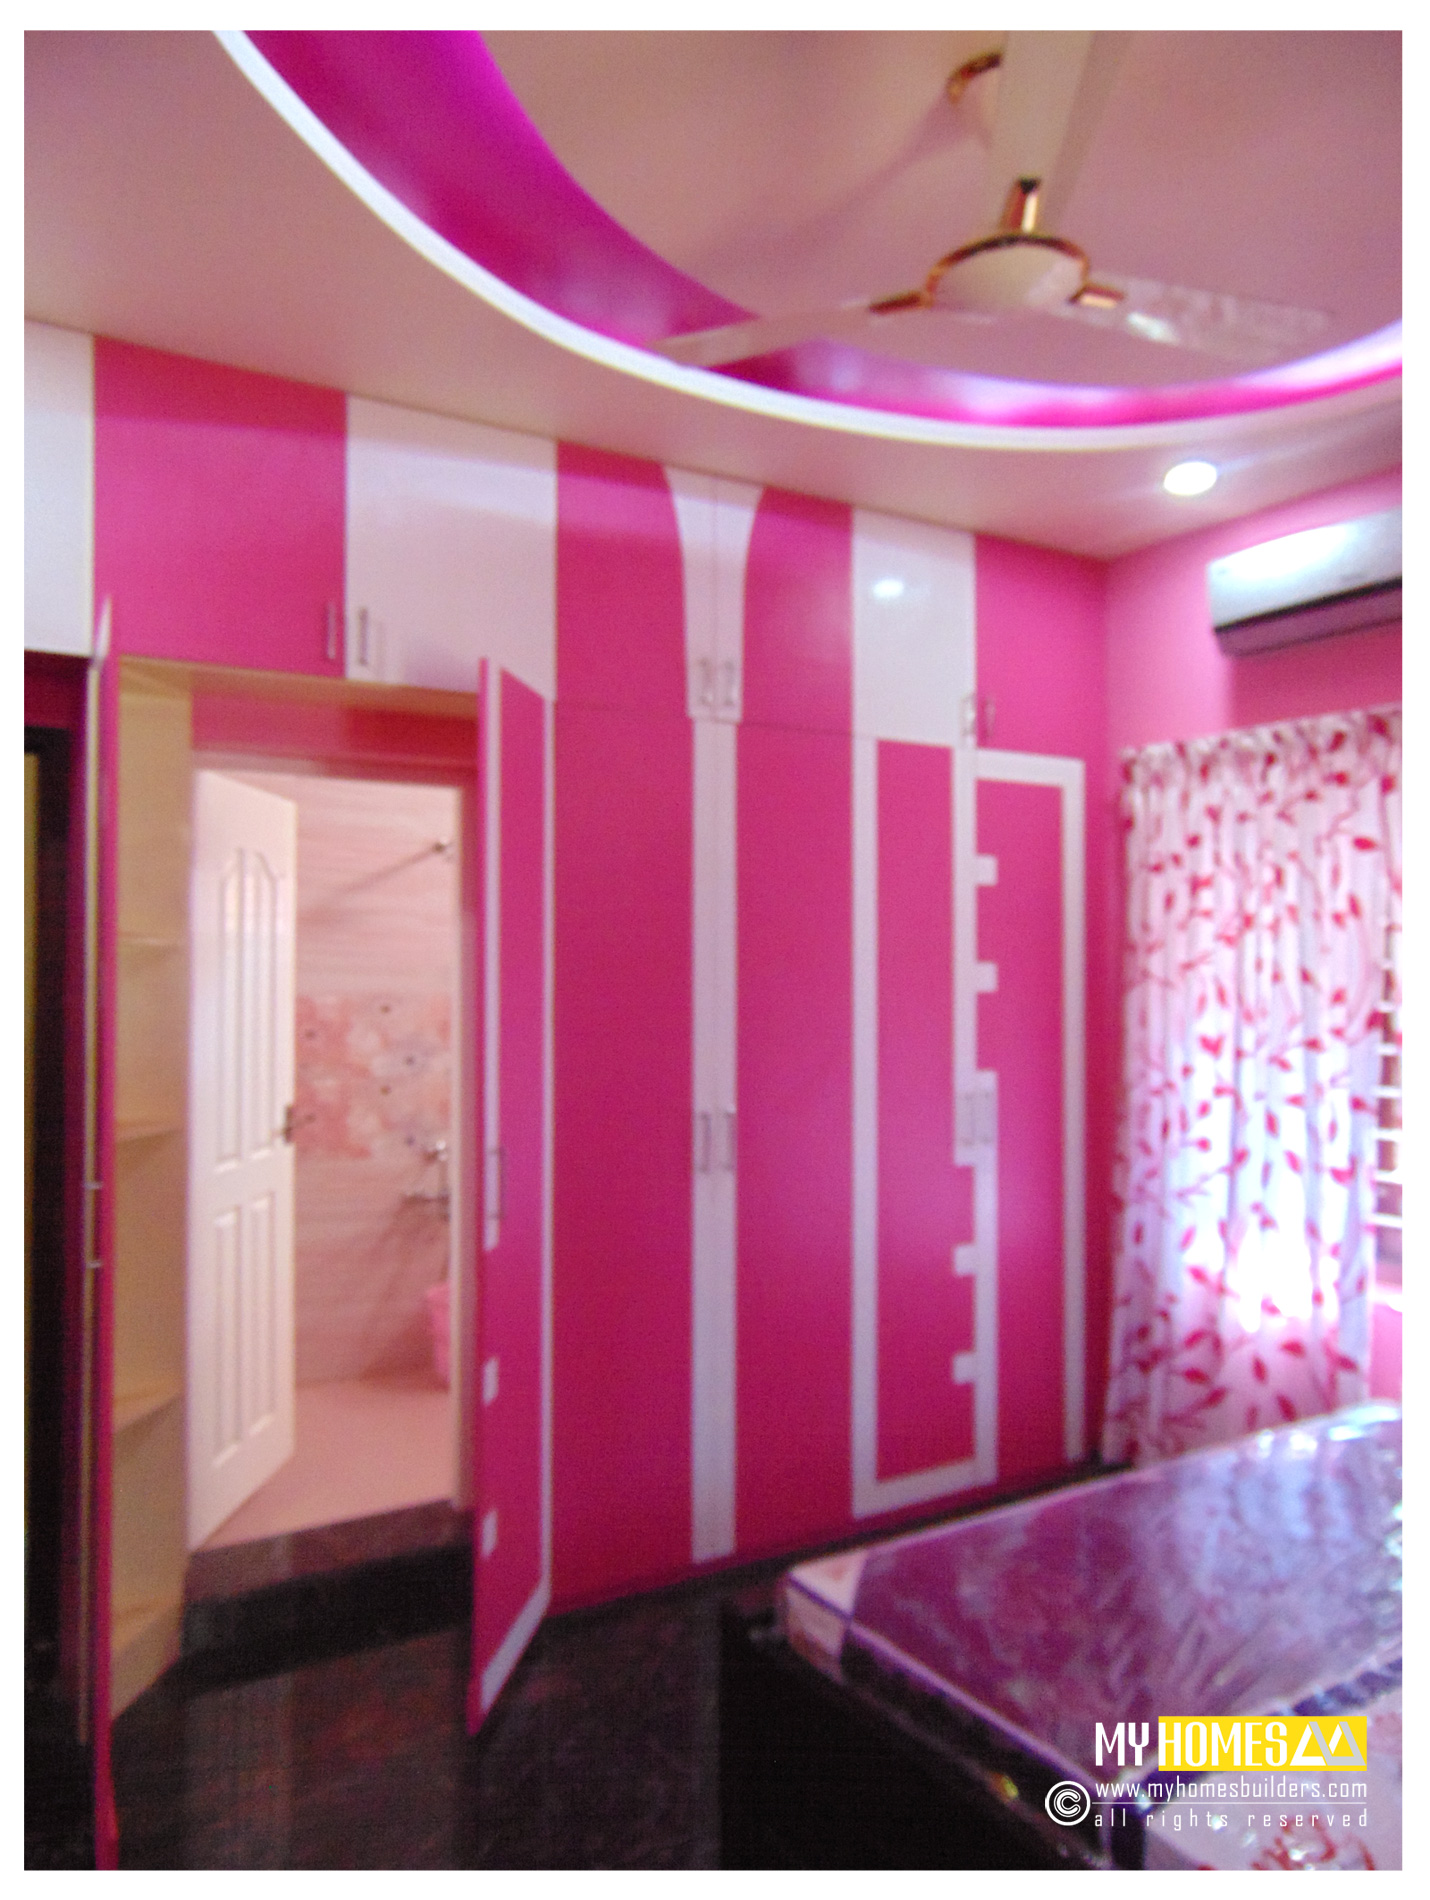 Kerala Best Home Interior Designs